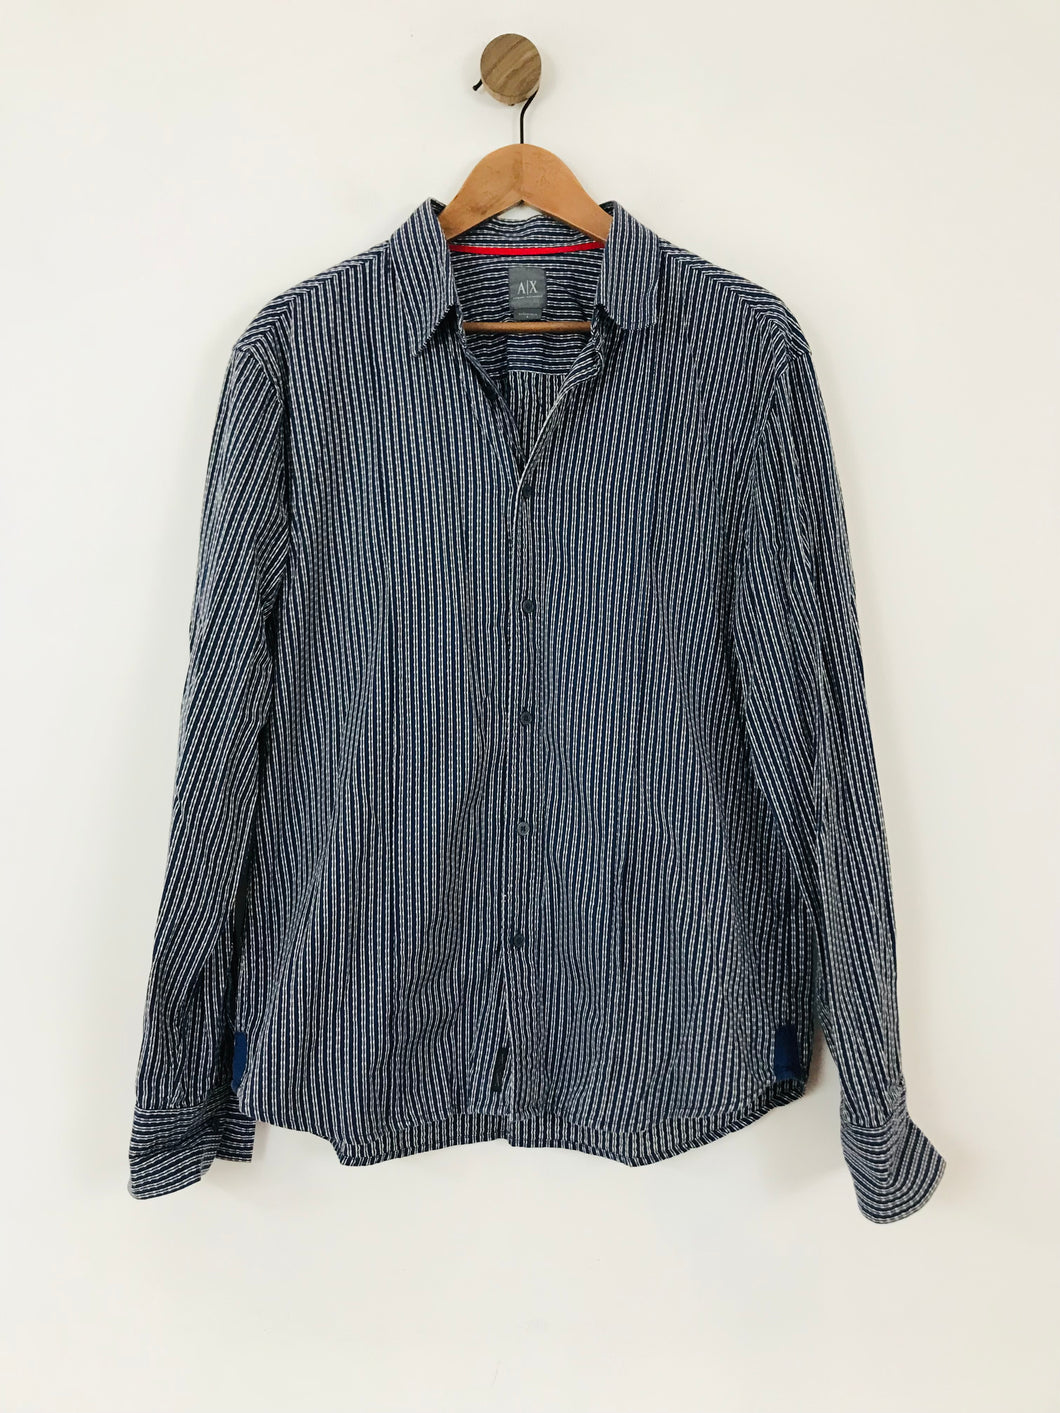 Armani Exchange Men's Textured Patterned Button-Up Shirt | L | Blue